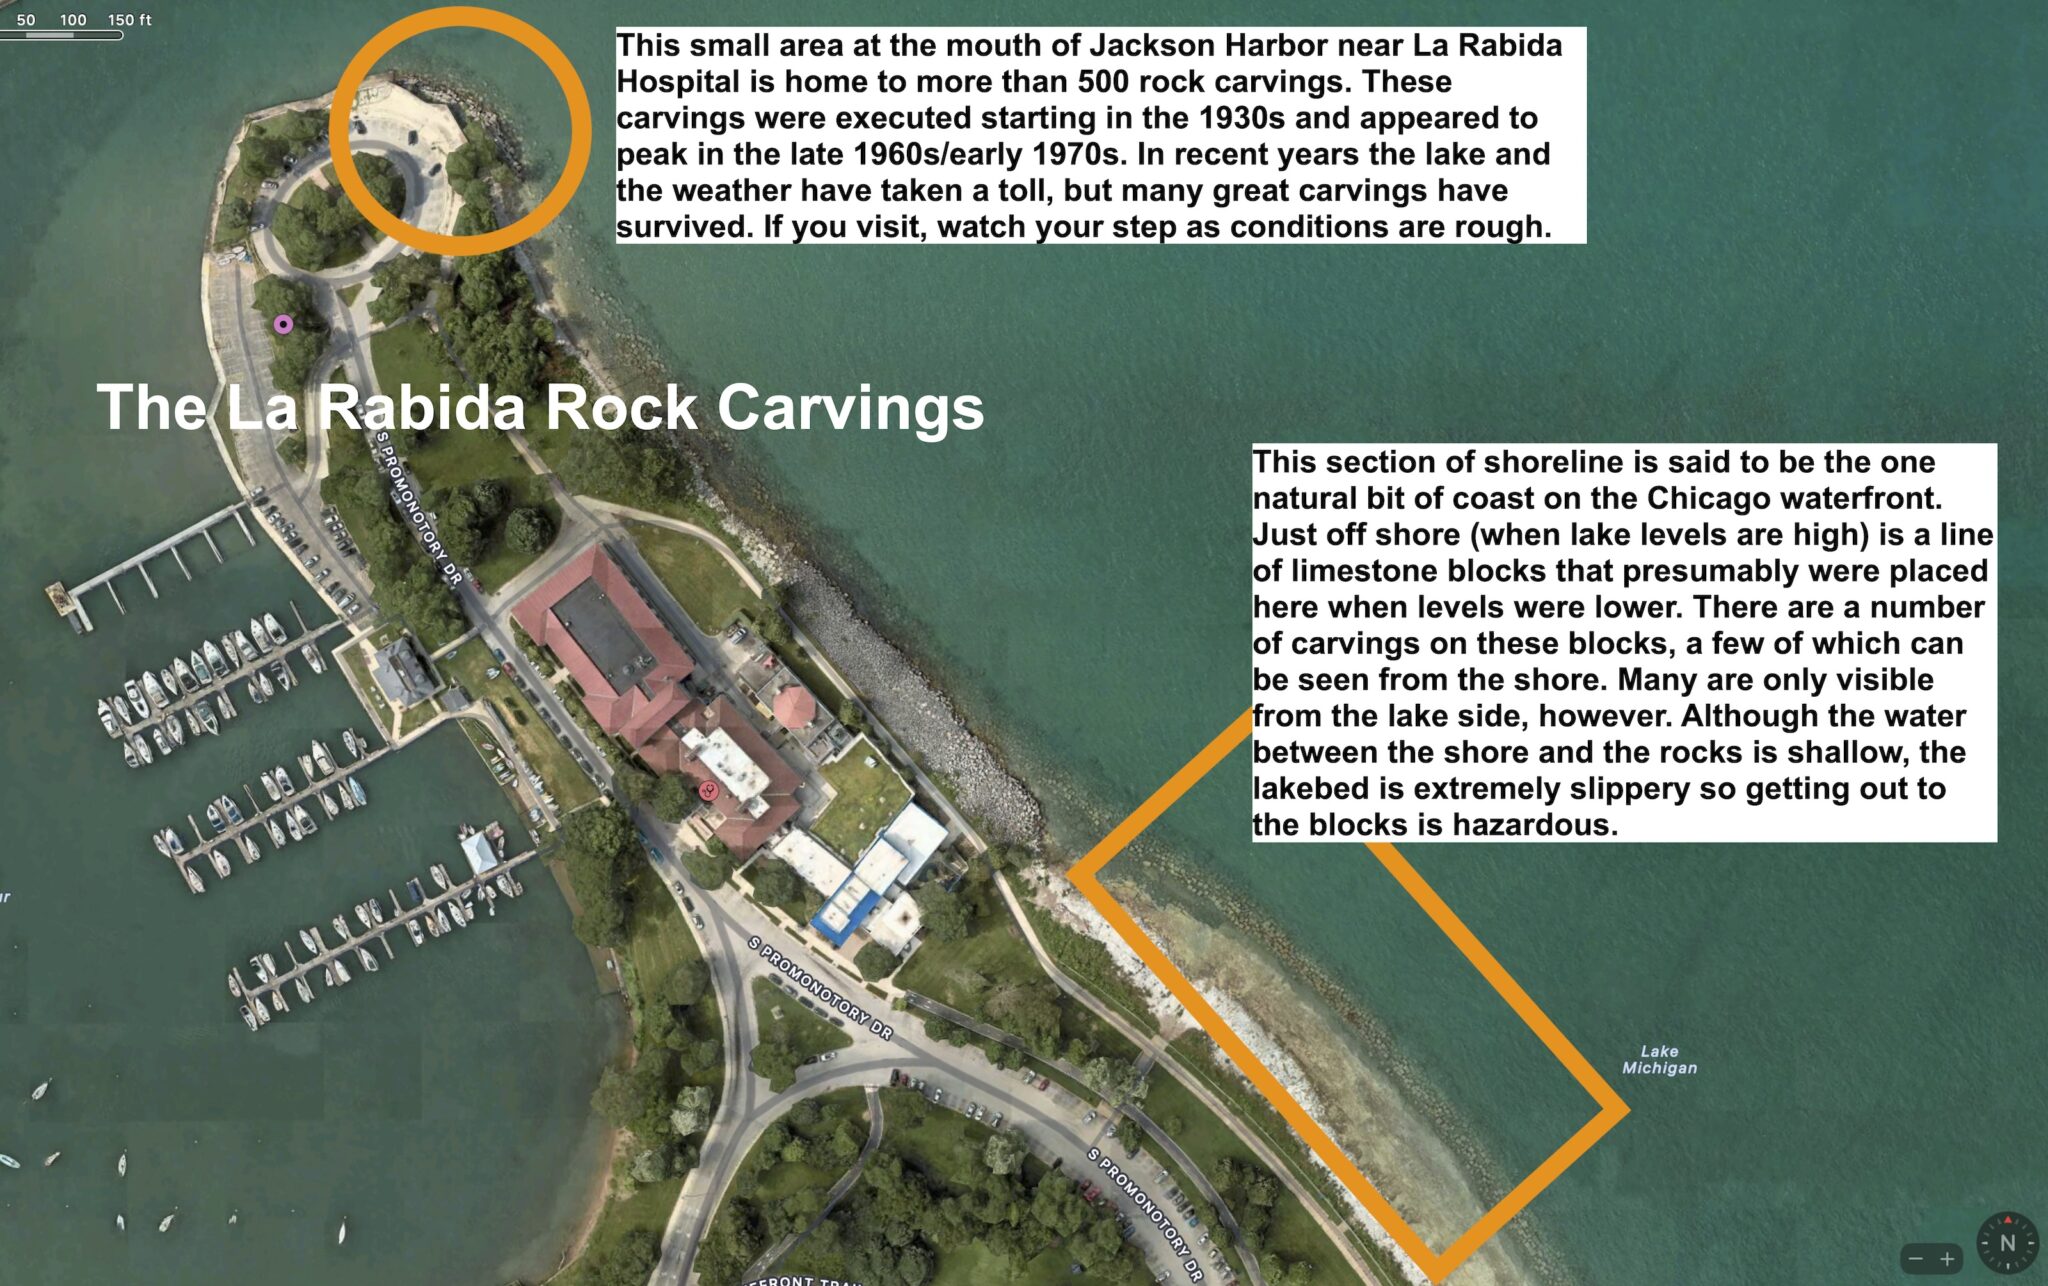 Image showing location of rock carvings near La Rabida Hospital